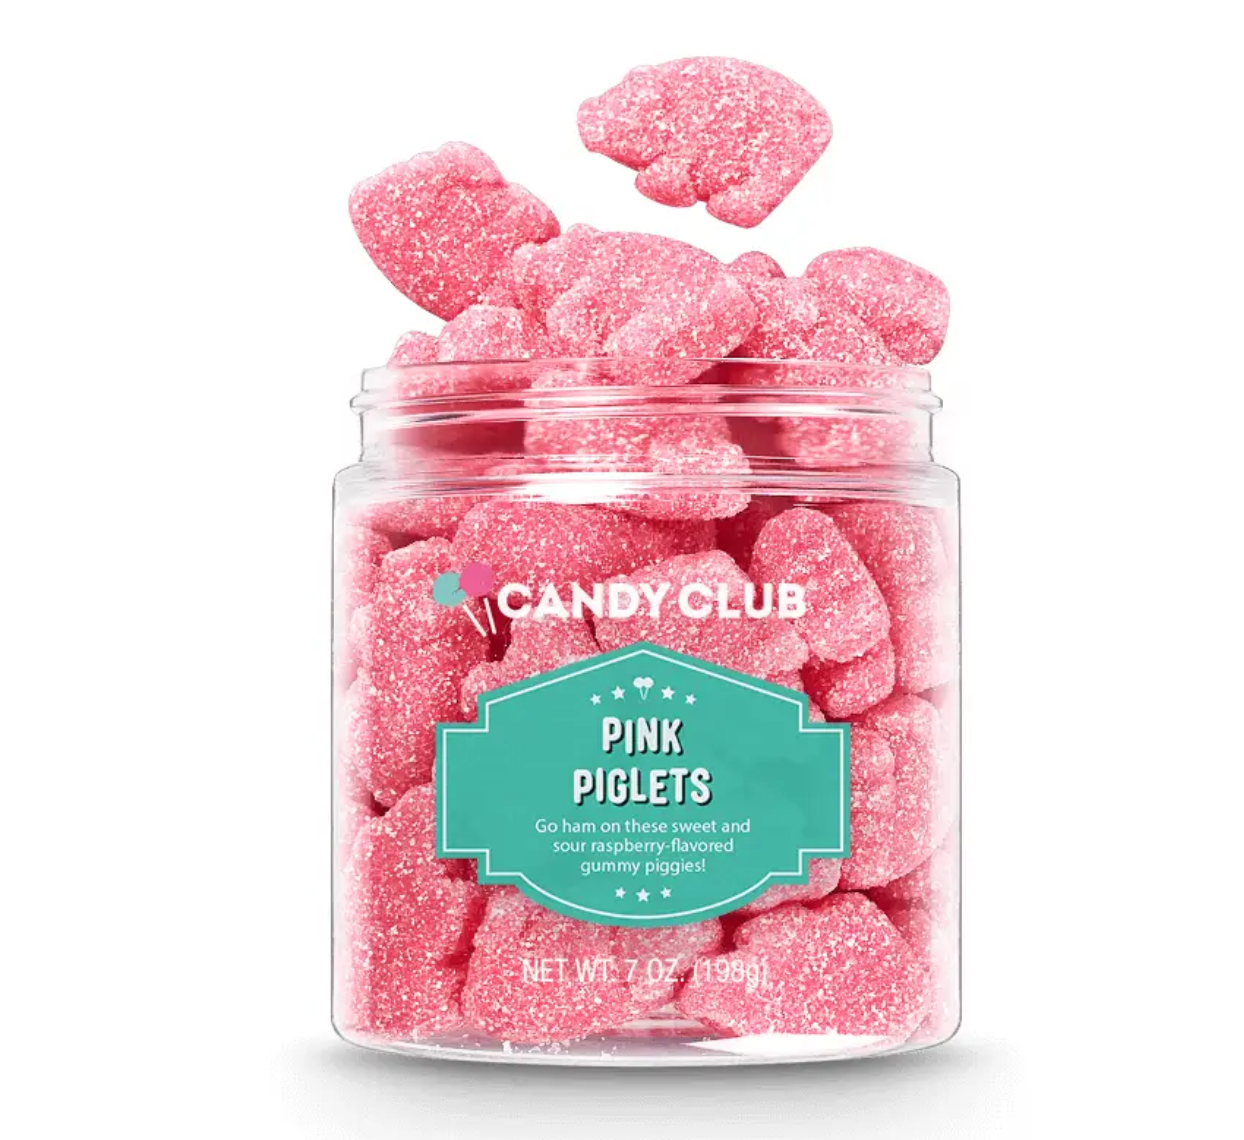 Candy Club Pink Pigglets